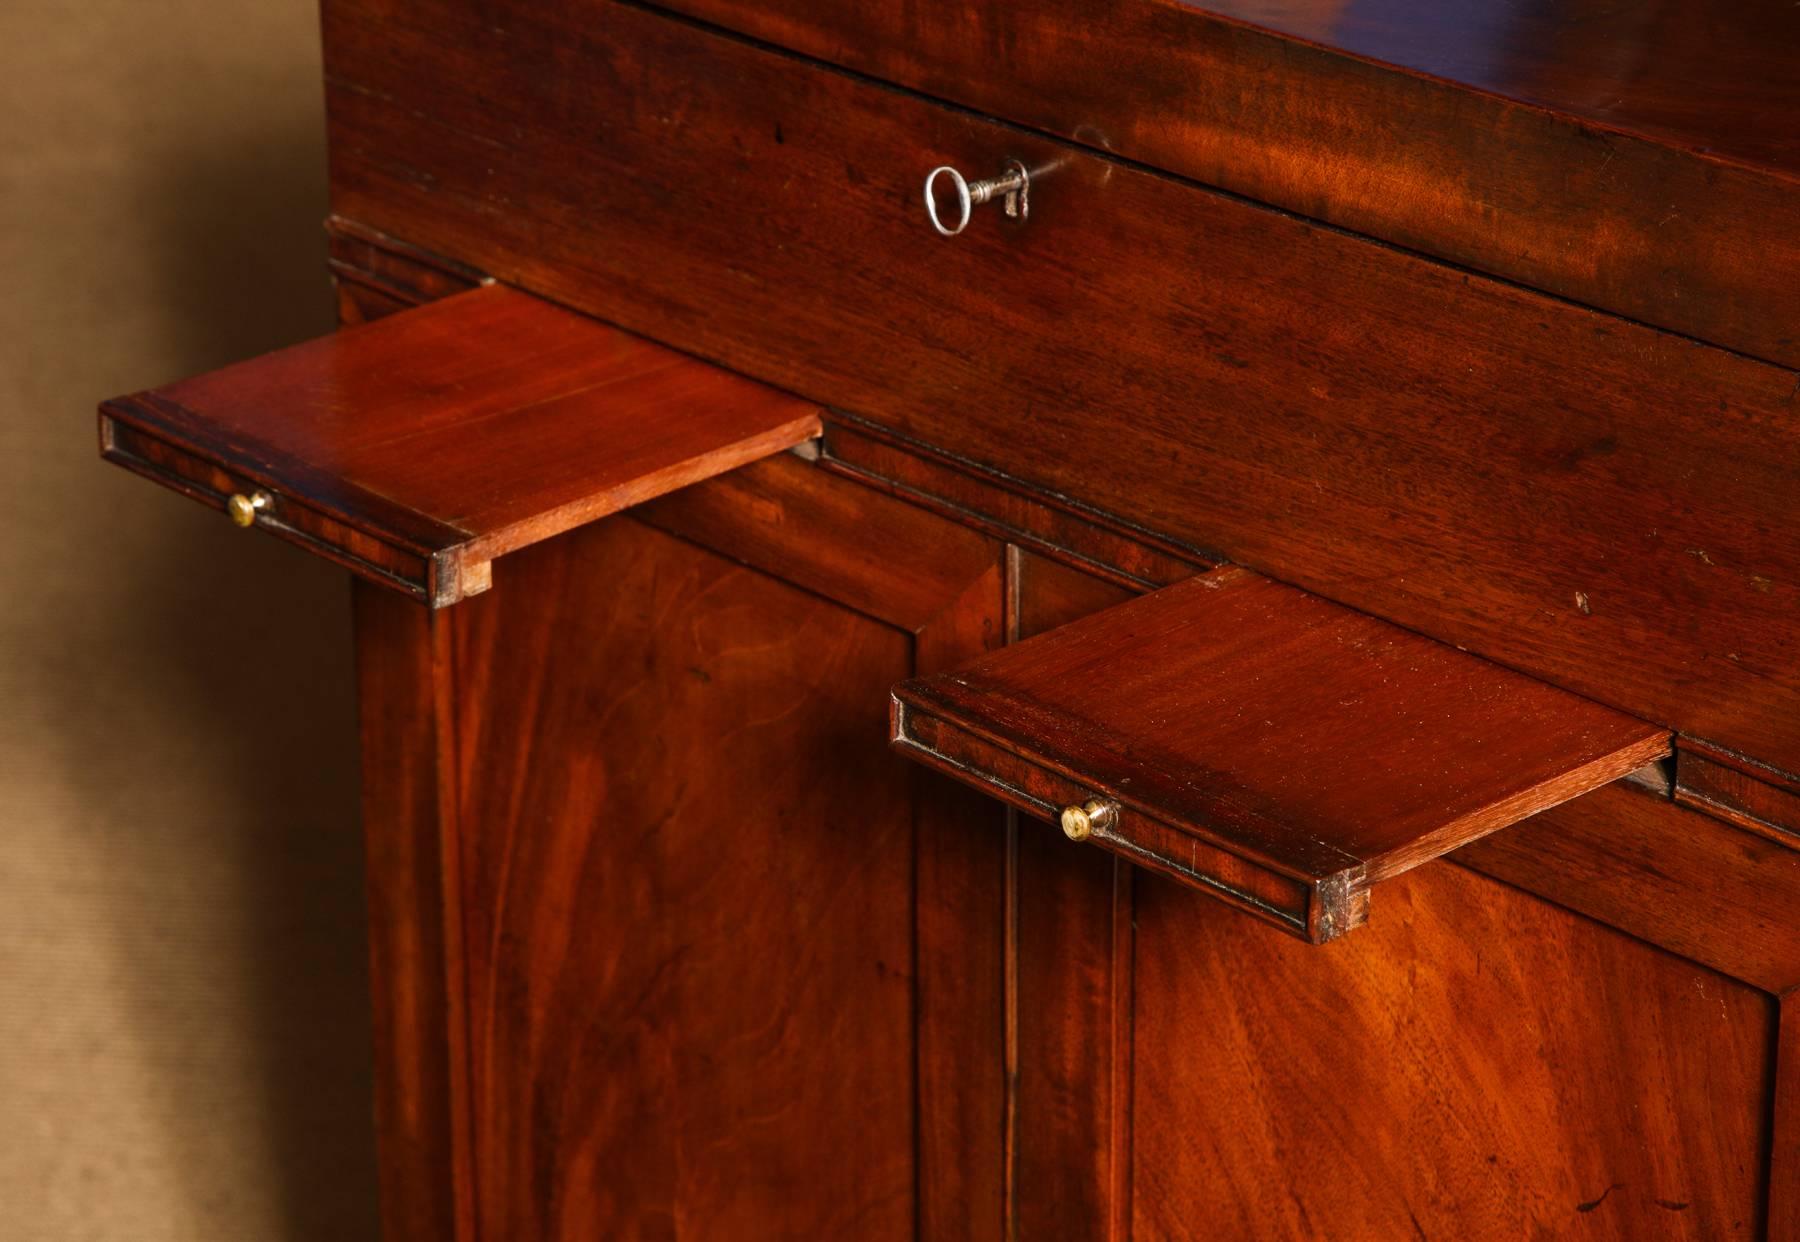 Cast Regency Mahogany Hinger Davenport Desk with Hidden Compartments, circa 1800 For Sale